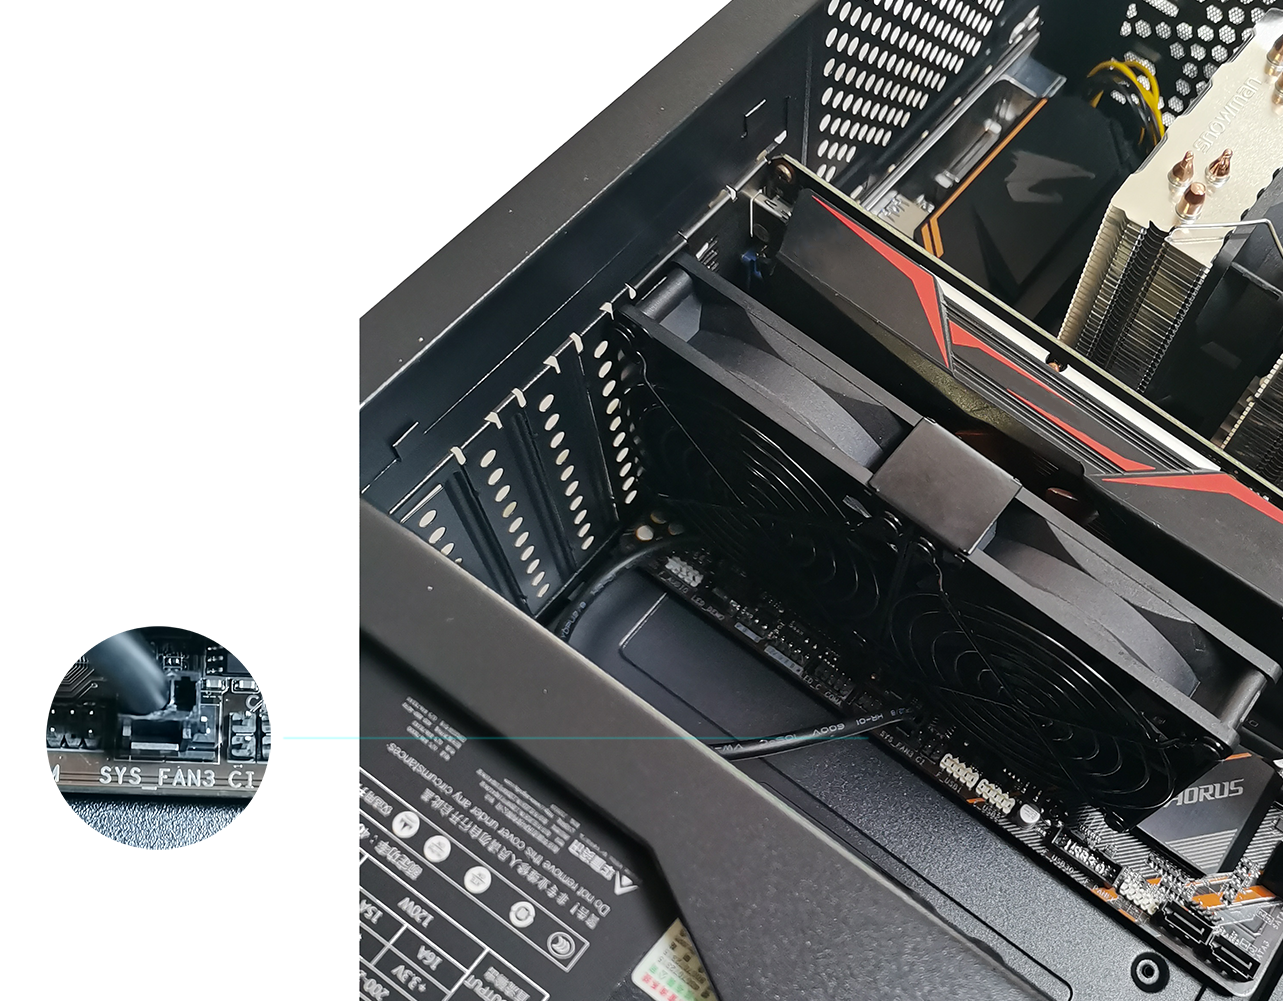 Grafikkarten-Lüfter2 x 92 mm -Hoher Luftstrom Lüfter, -PCI-Halterung Kühler - GPU-Lüfter ，unterstützt 5 V, 7V,12V unterstützt unterstützt Support Mainboard sys_fan Schnittstelle